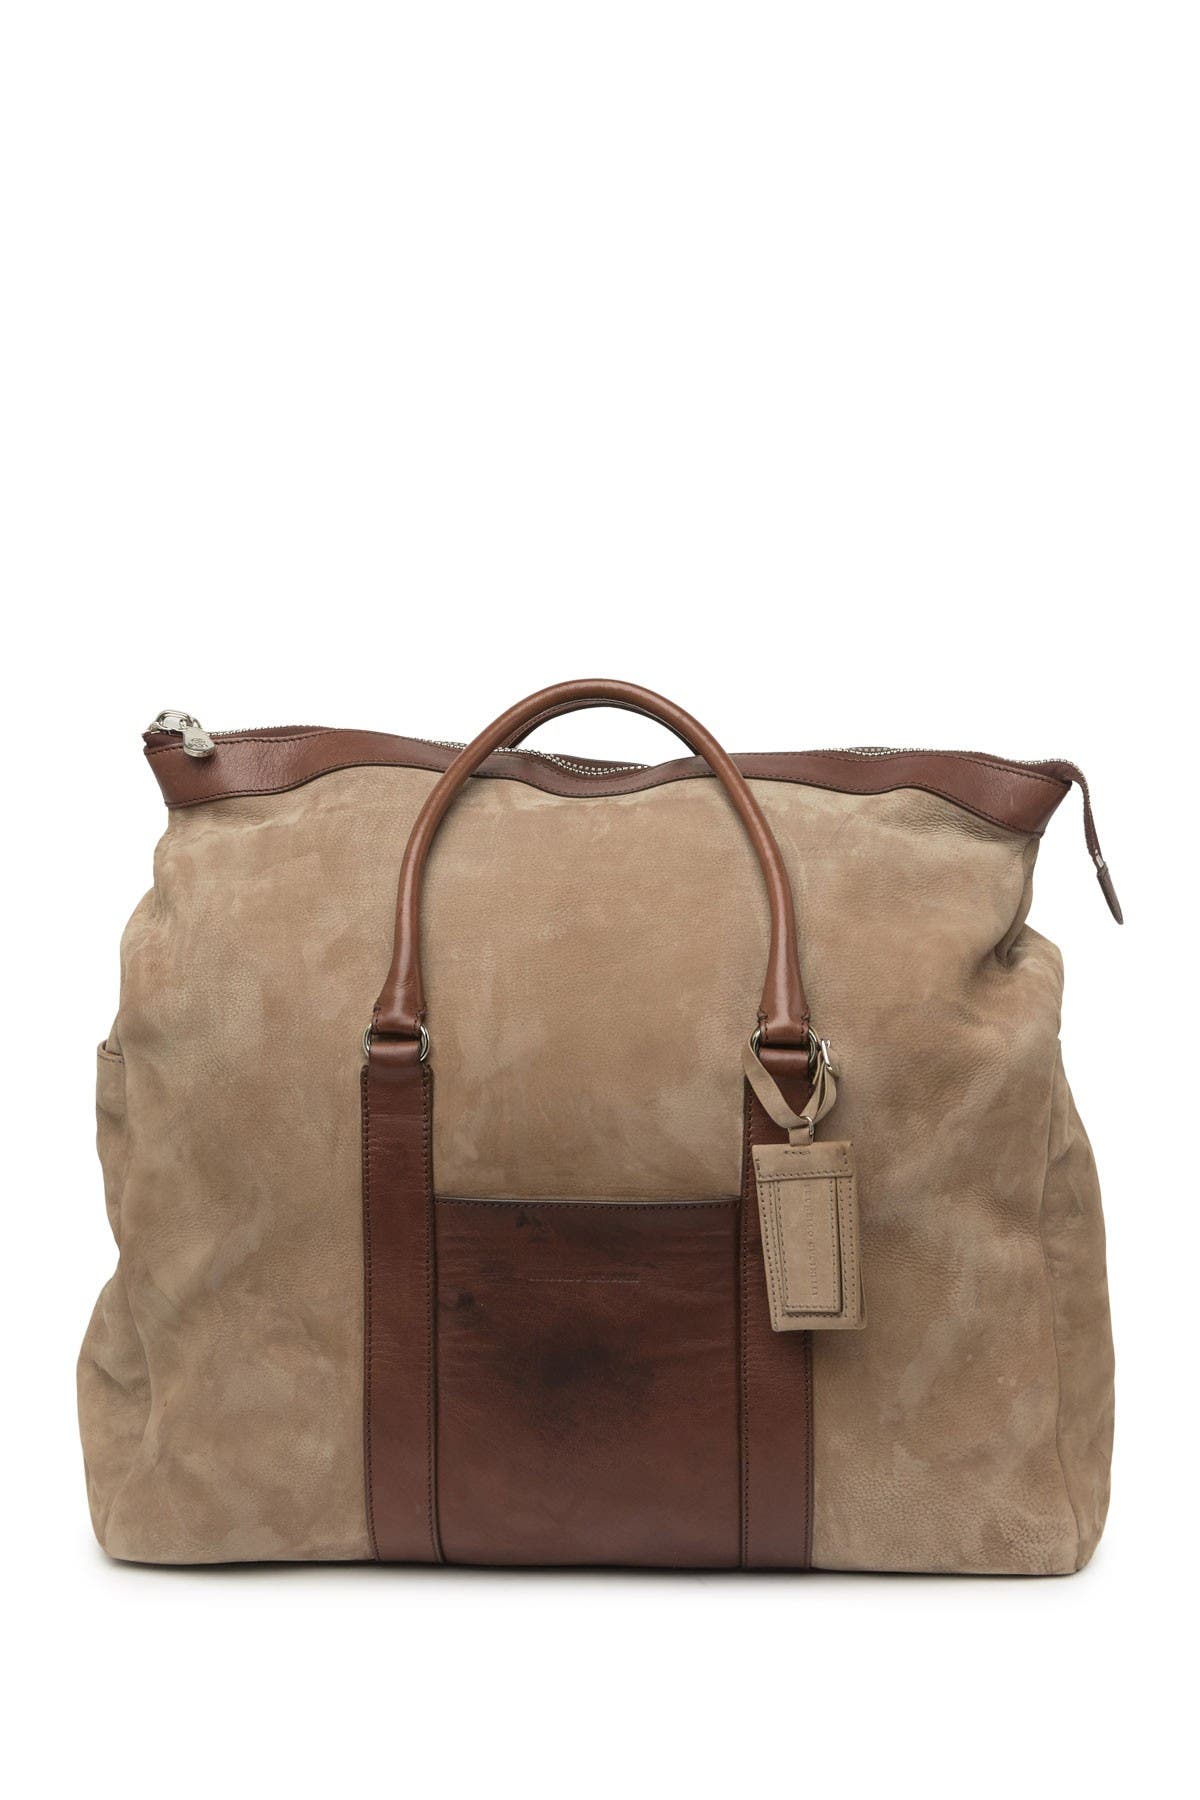 Brunello Cucinelli Contrast Suede & Leather Handbag In Open Brown9